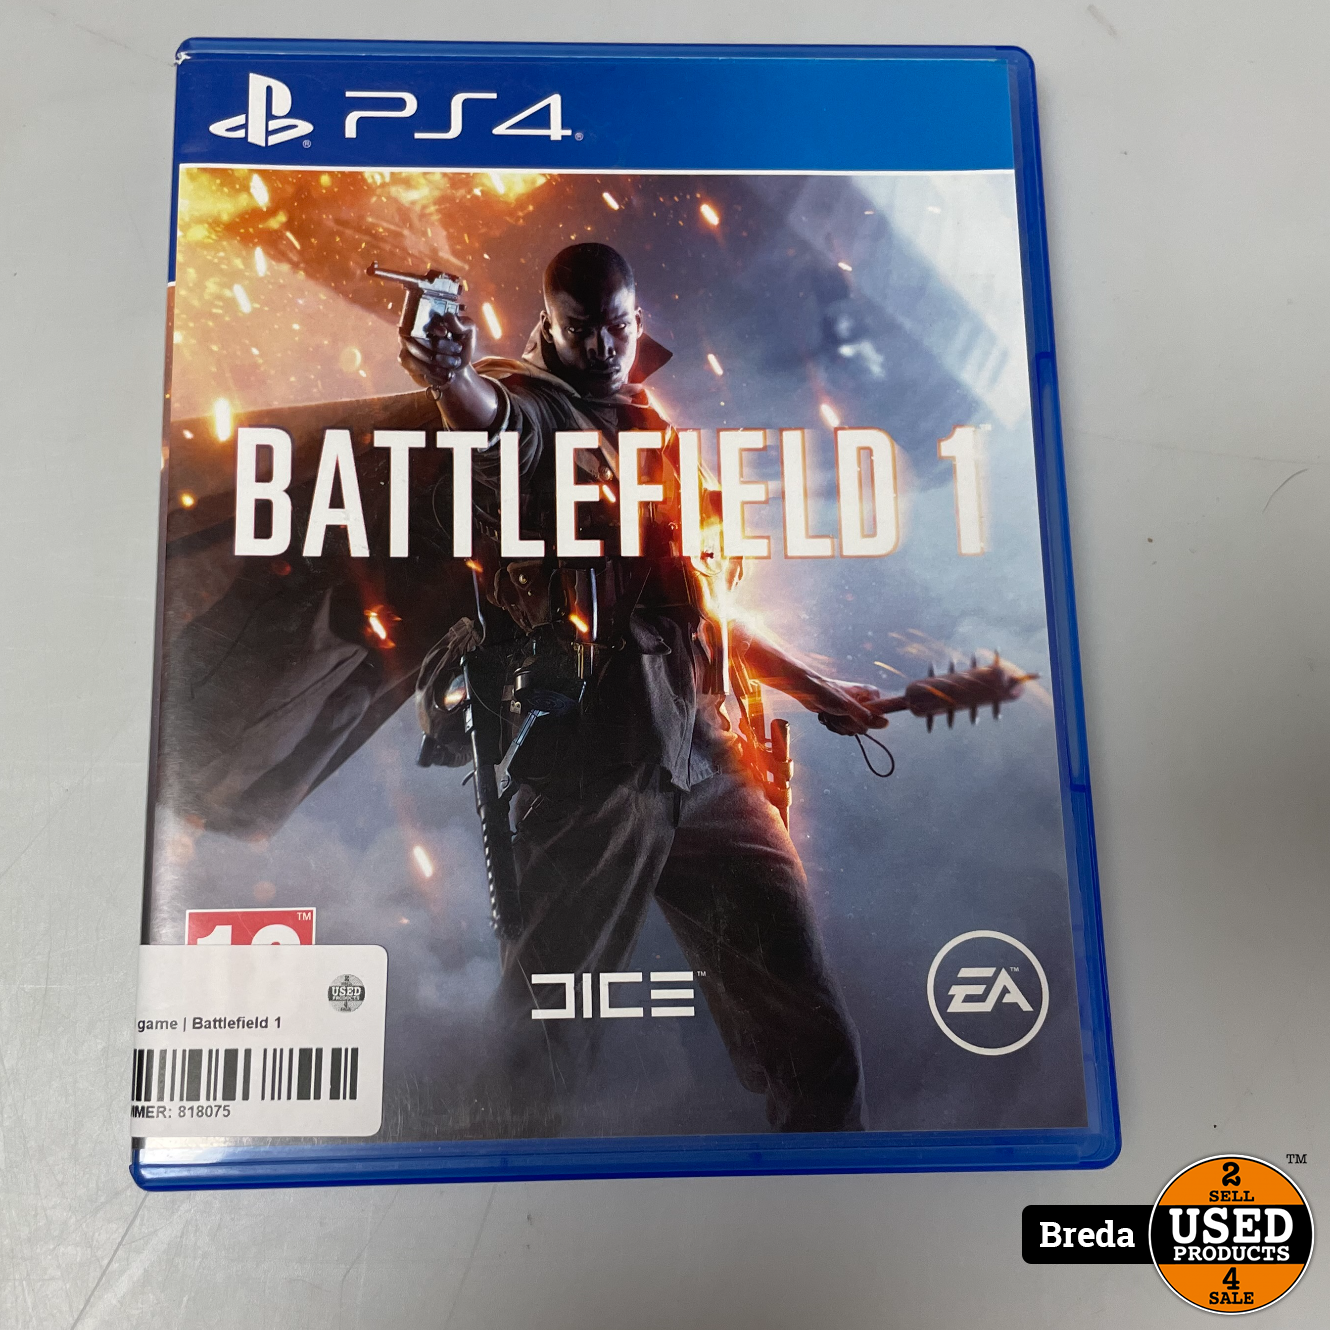 Cumulatief Tegenstrijdigheid Voorlopige naam Playstation 4 spel | Battlefield 1 - Used Products Breda